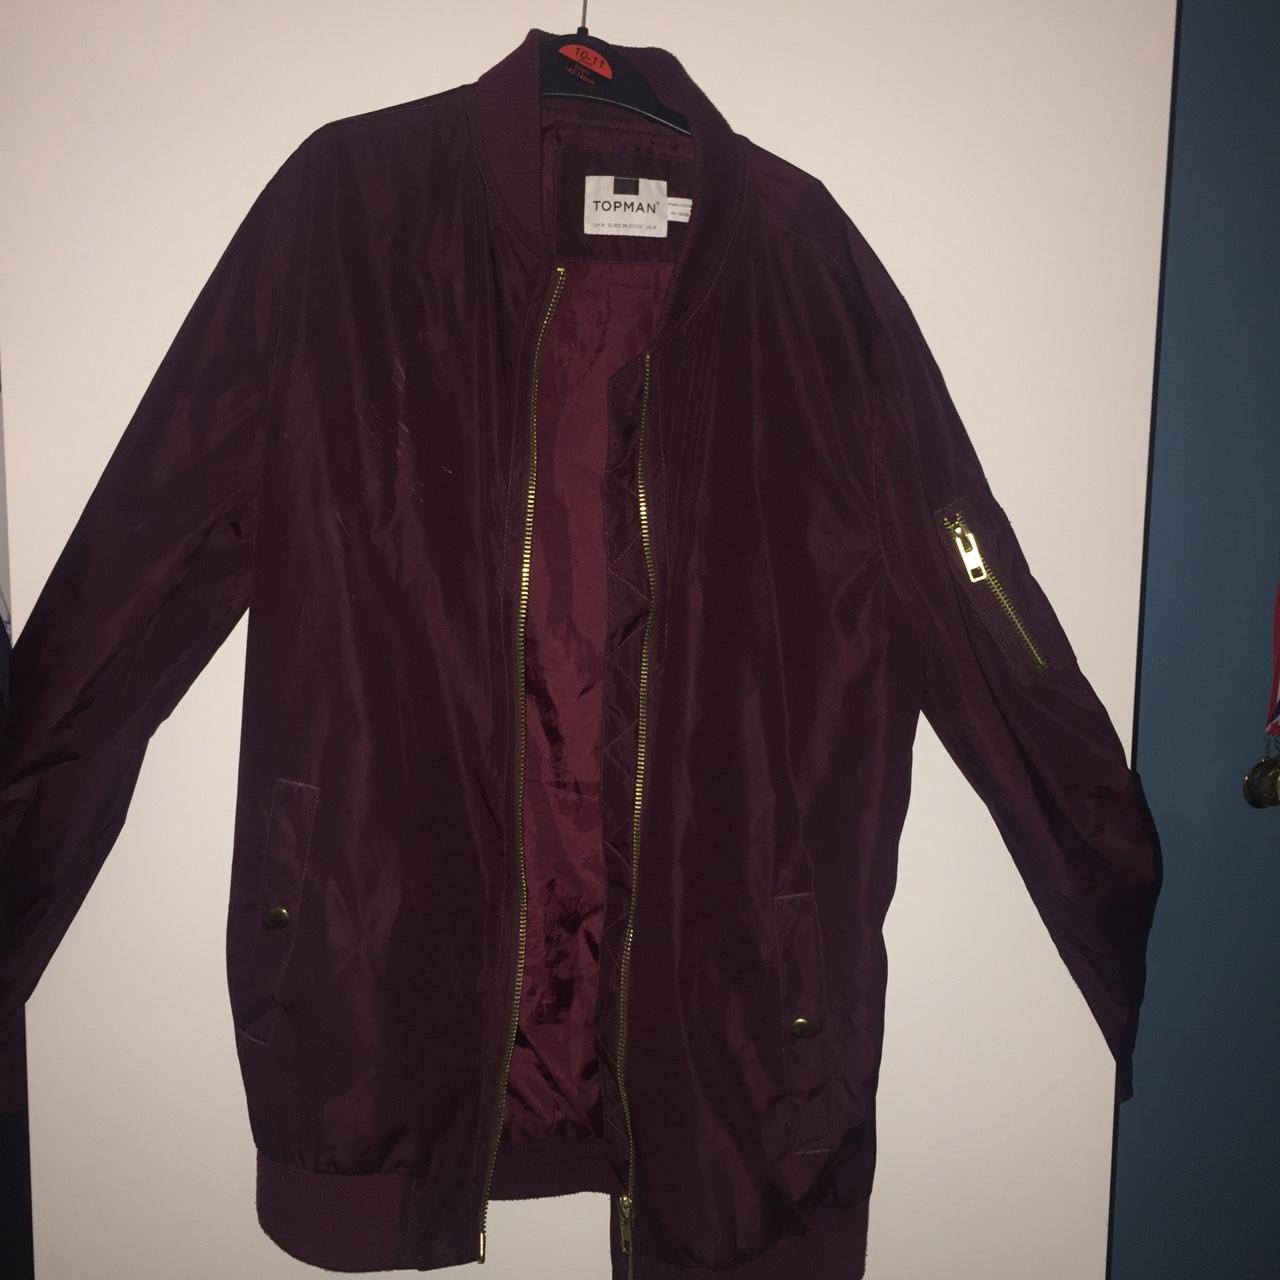 Stylish Topman burgundy bomber jacket with gold zip... - Depop